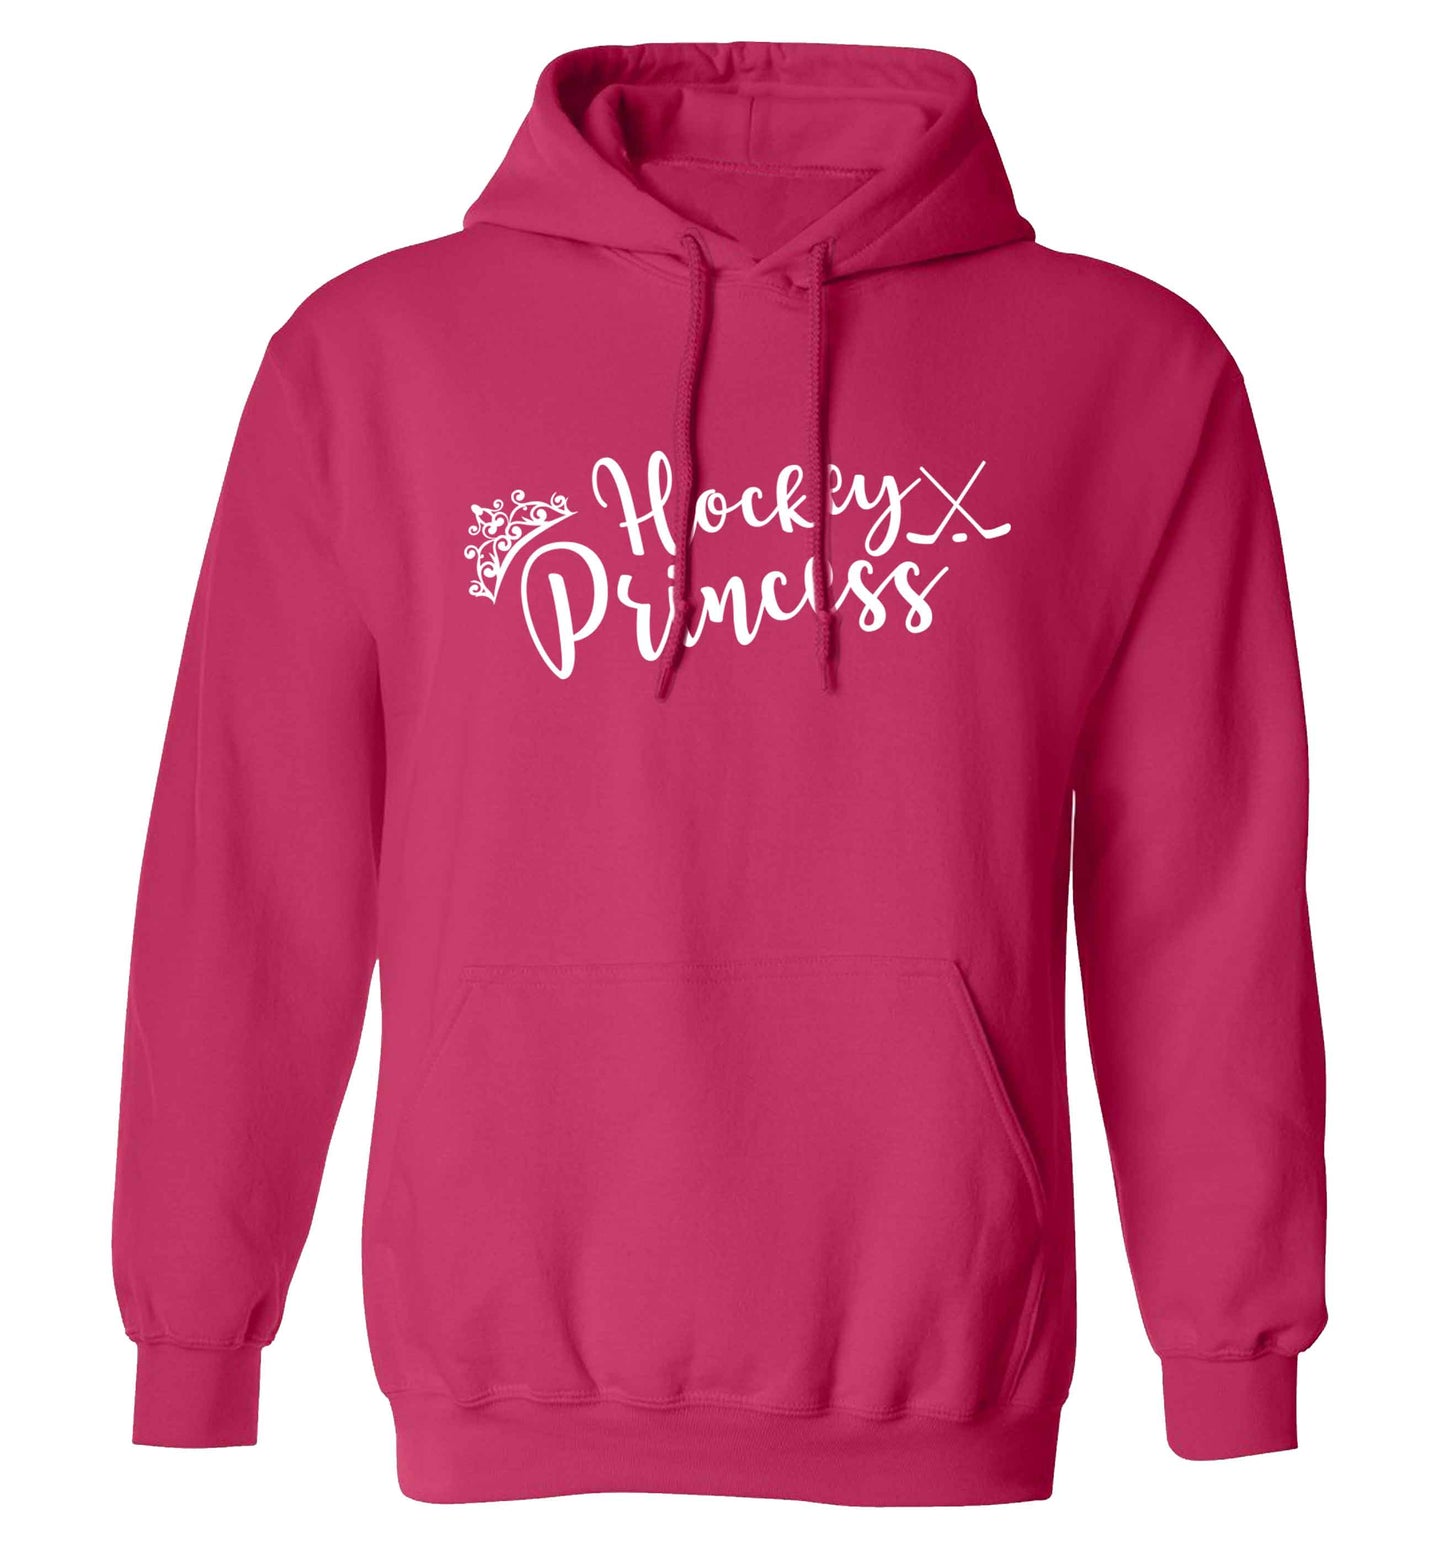 Hockey princess adults unisex pink hoodie 2XL